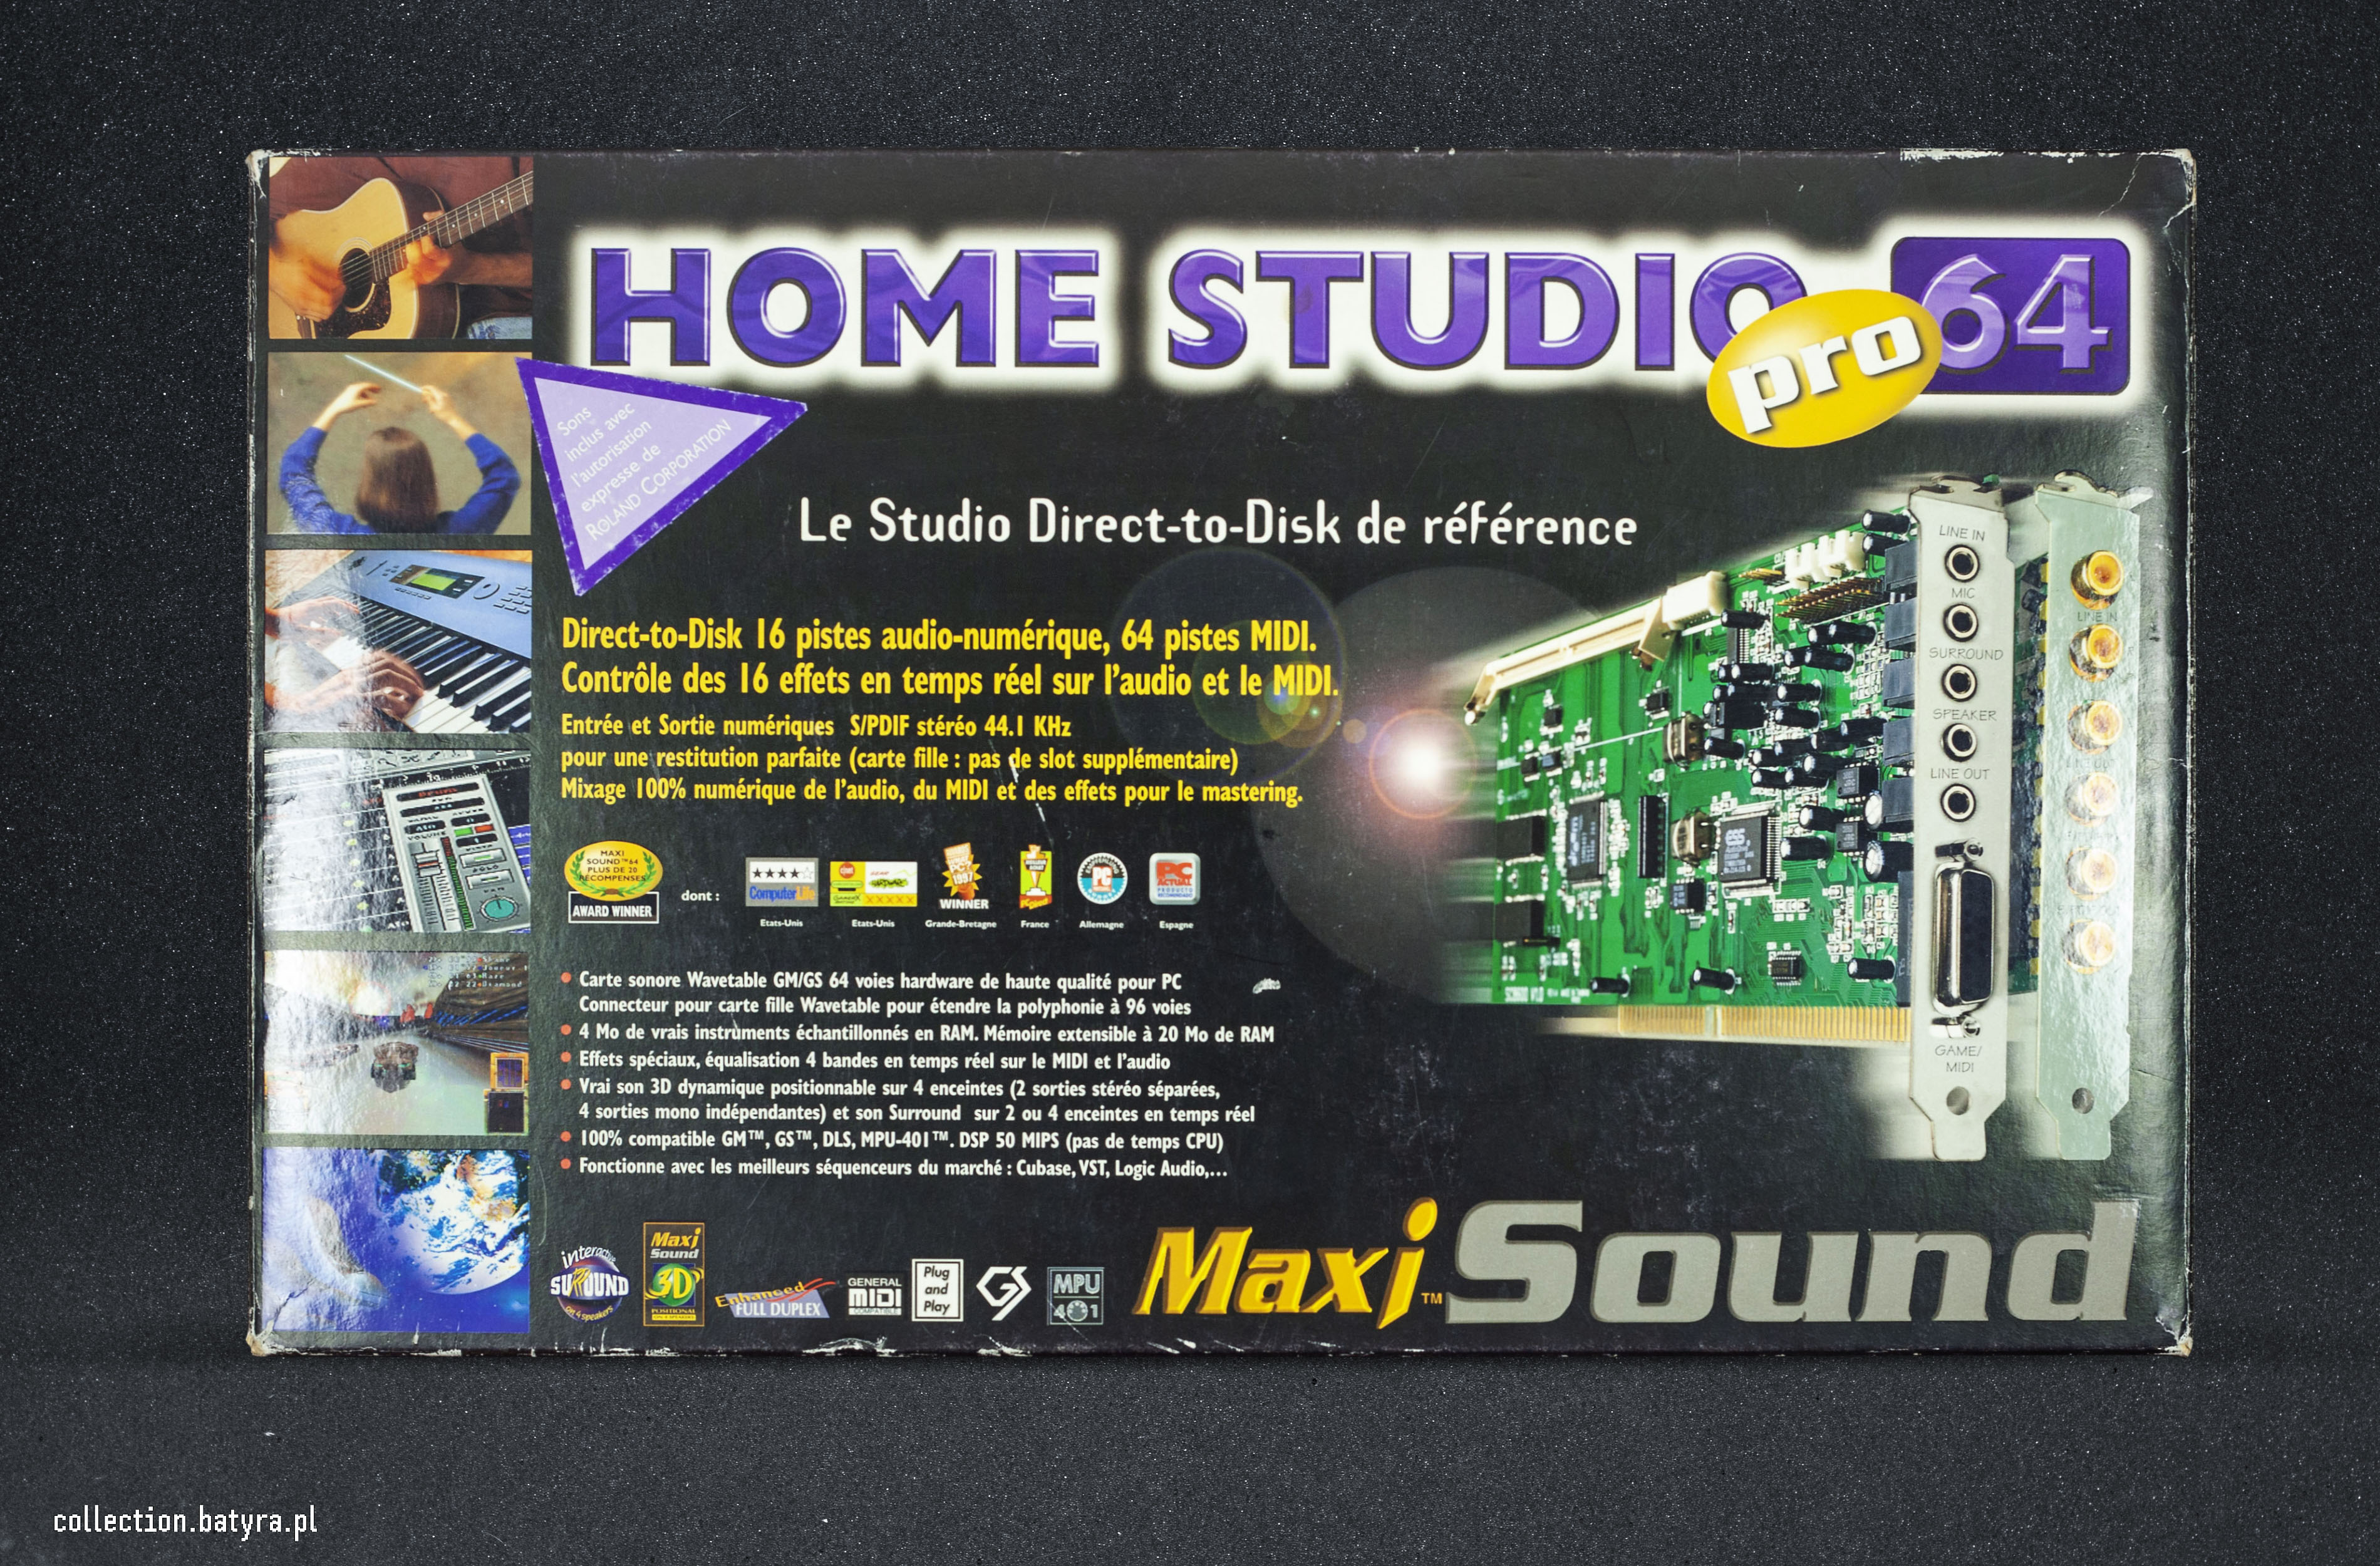 https://collection.batyra.pl/uploads/cms/soundcards/guillemot/maxistudio/Guillemot-Maxi-Sound-Home-Studio-pro64-Box-1.jpg